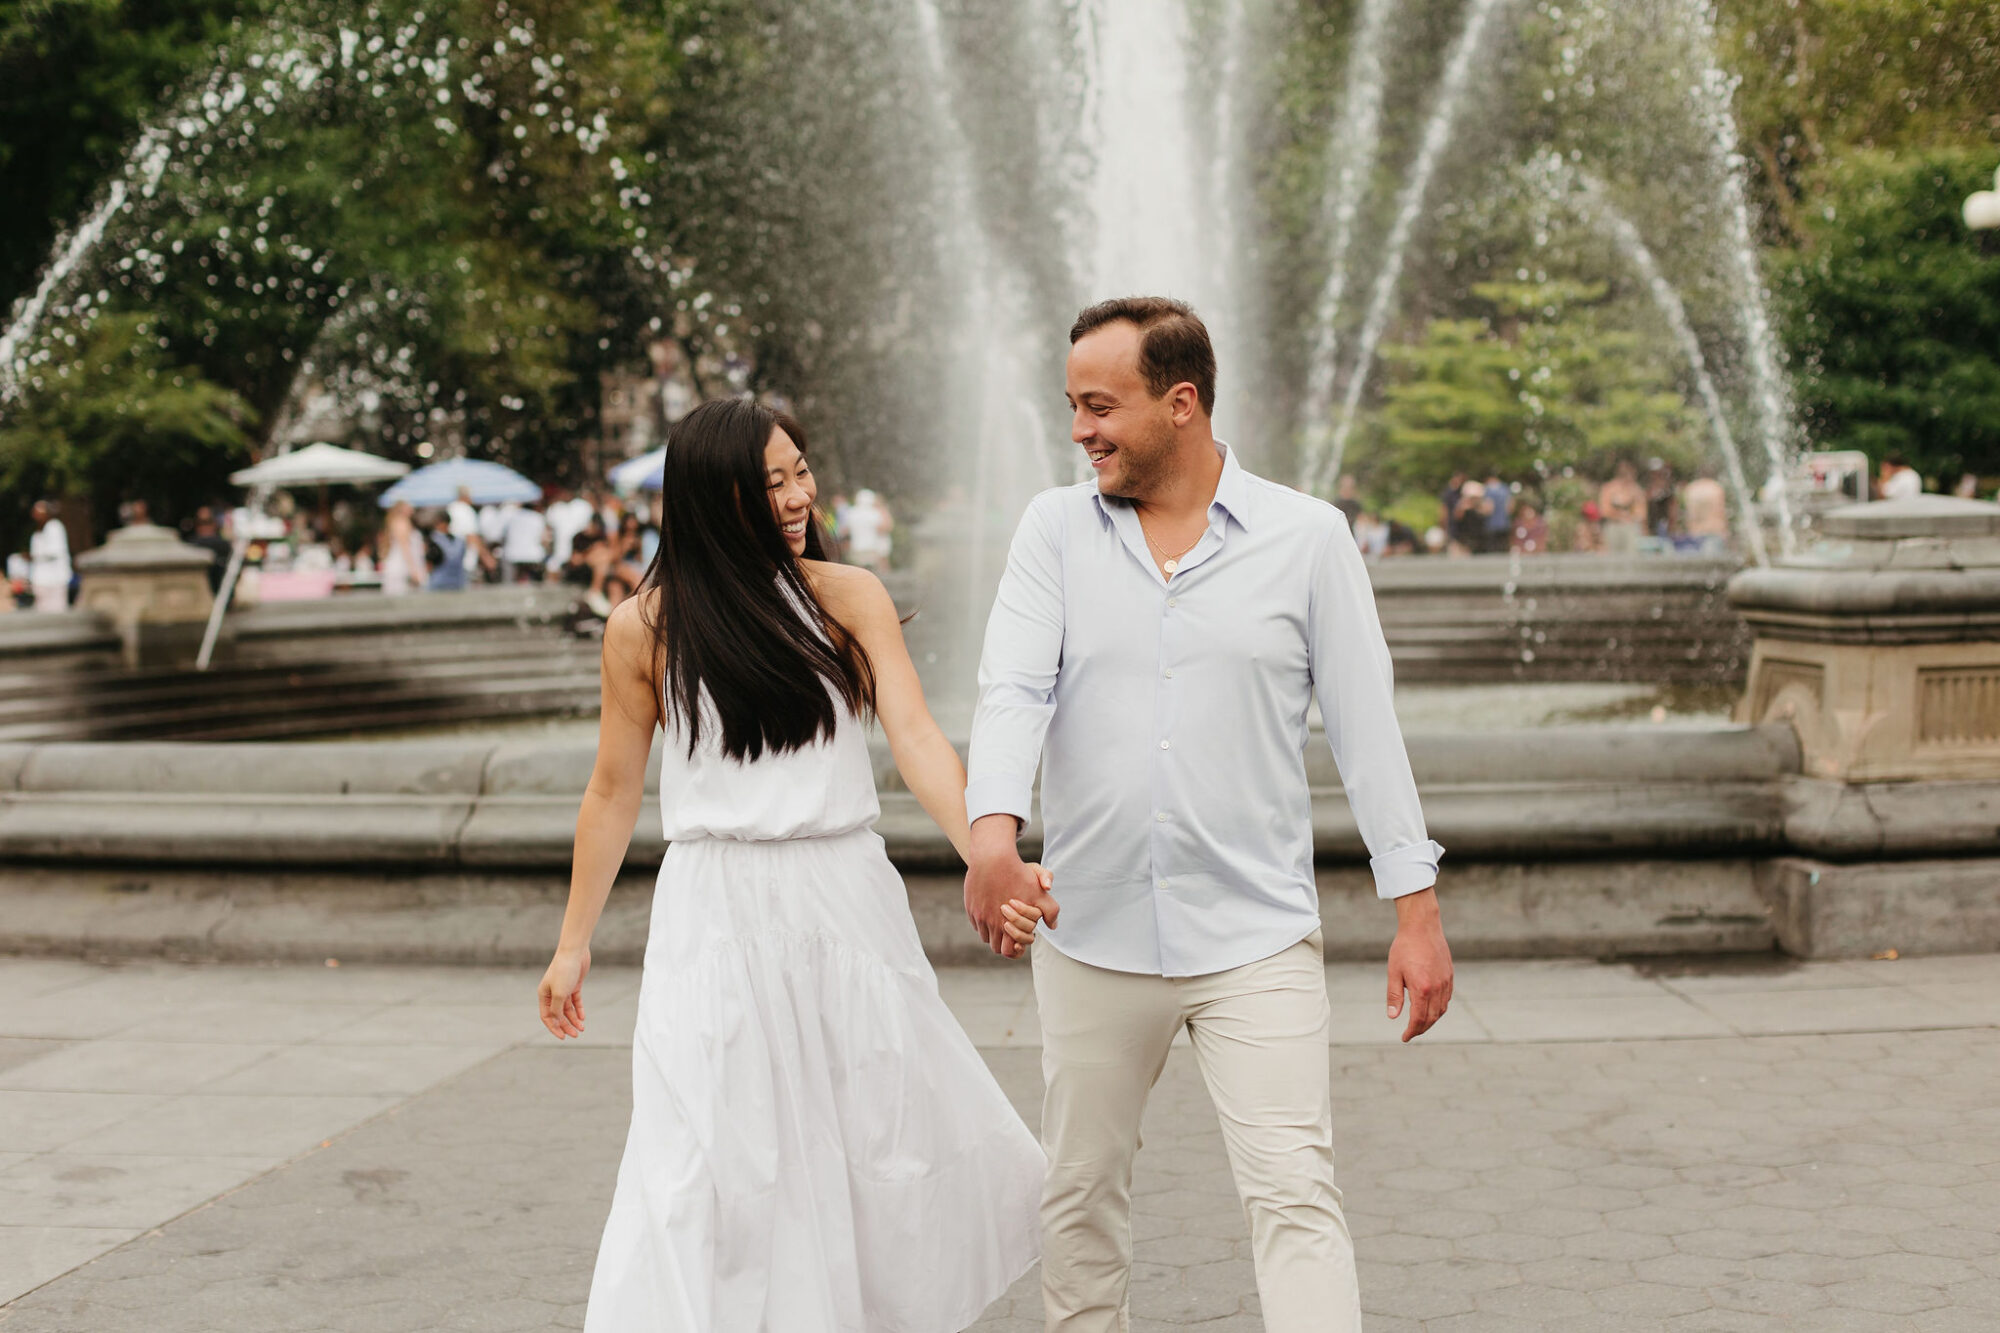 Washington square park, engagement photos, fountain, new york city streets, white dress